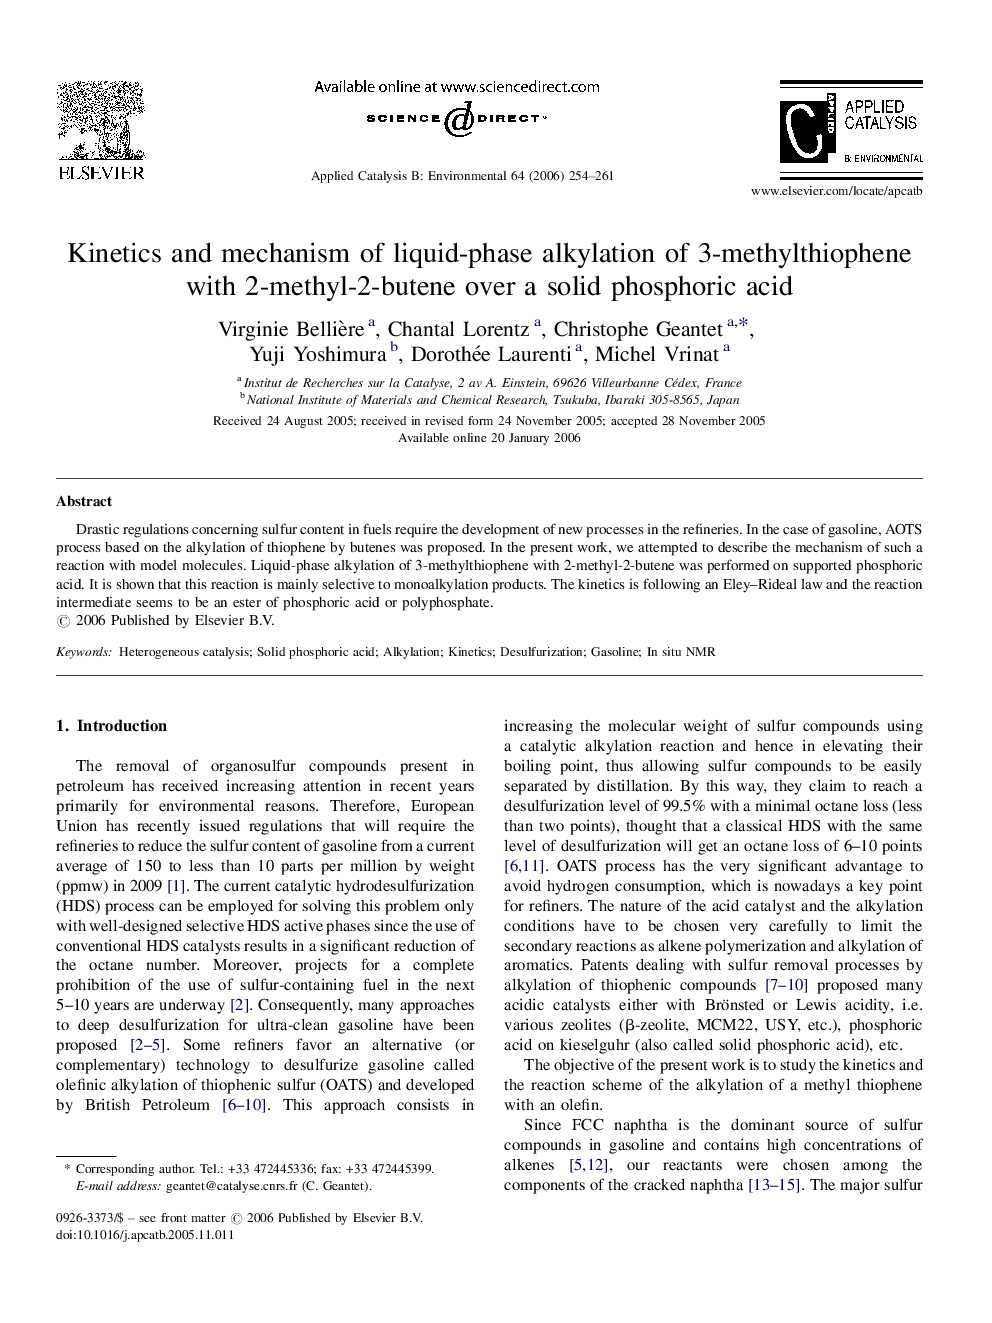 Kinetics and mechanism of liquid-phase alkylation of 3-methylthiophene with 2-methyl-2-butene over a solid phosphoric acid